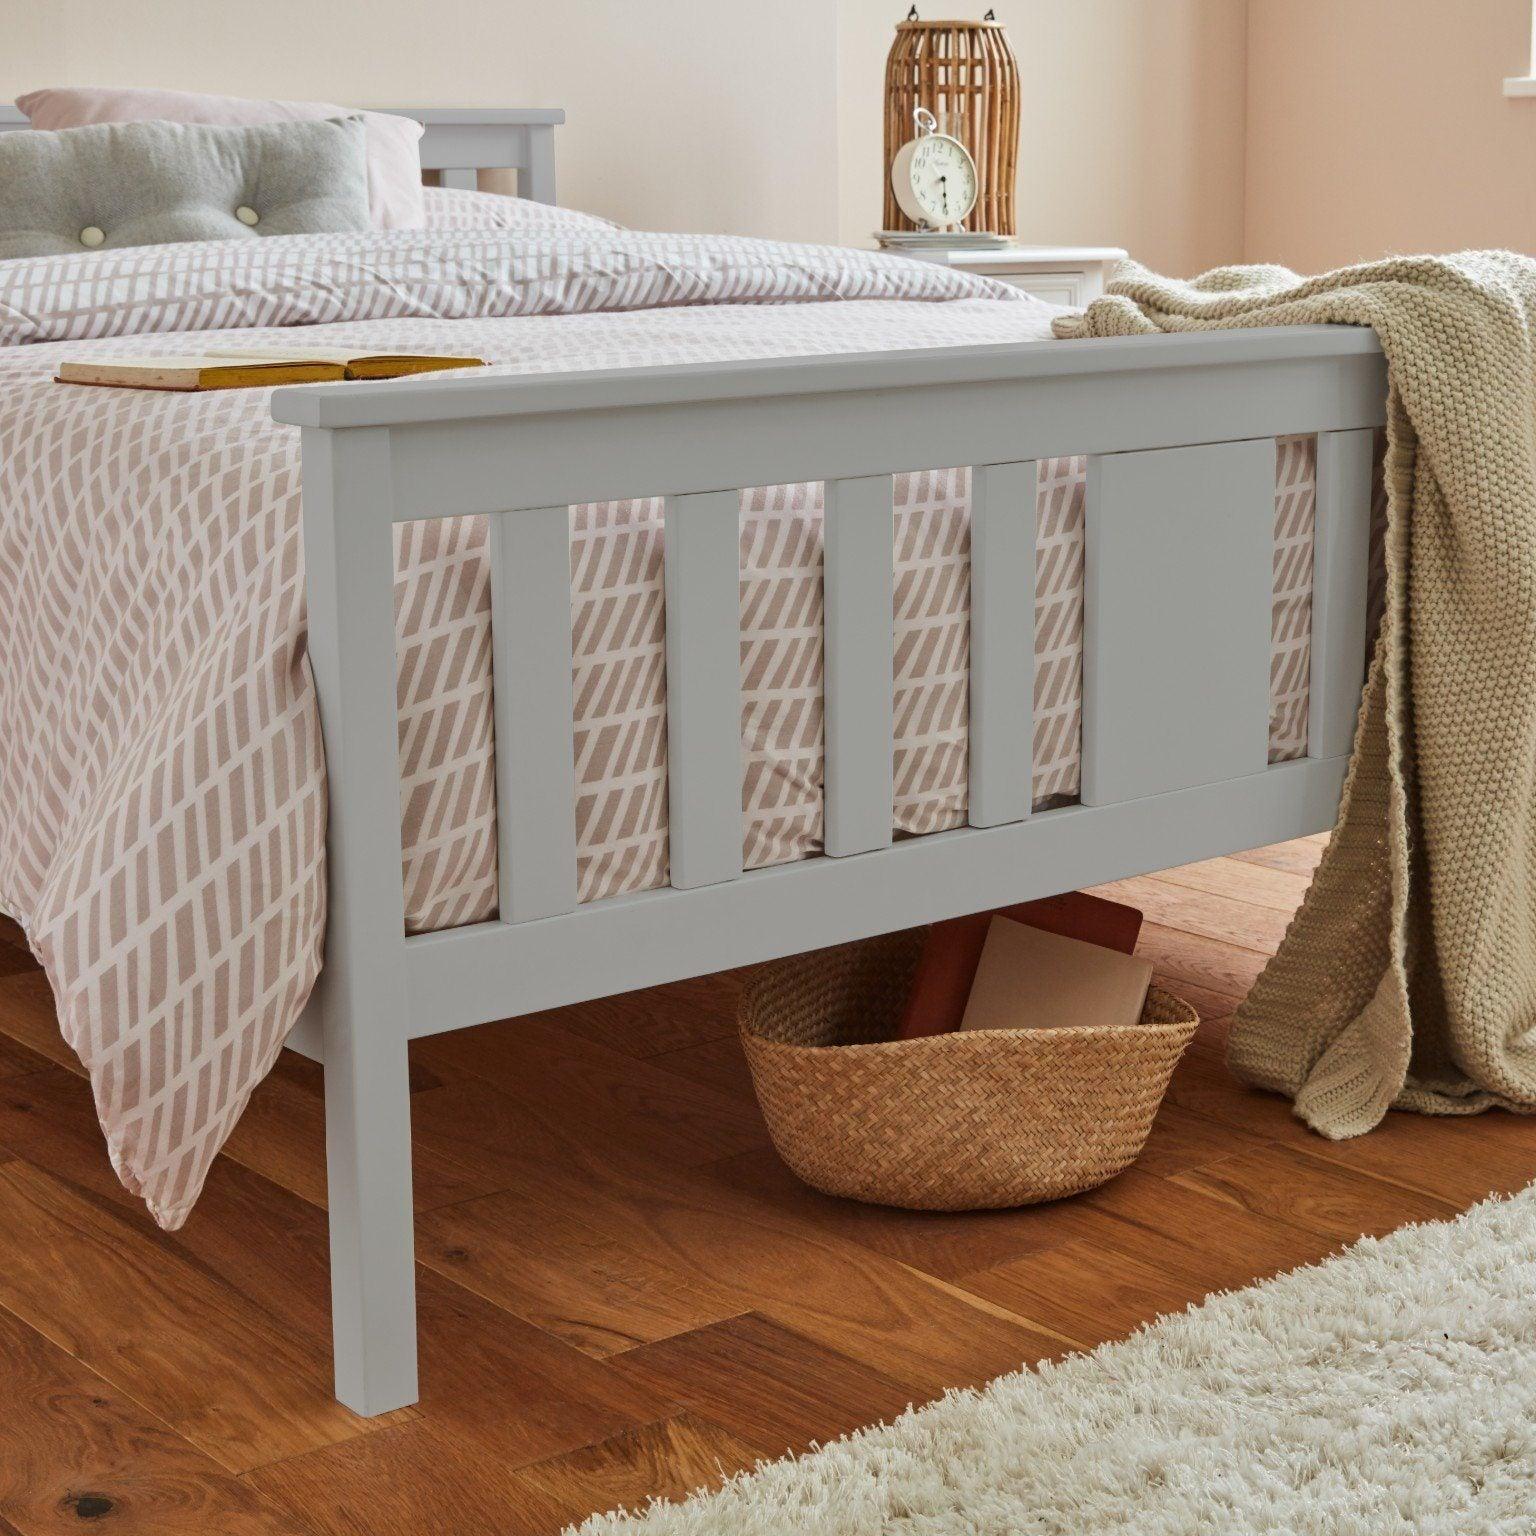 Grey wooden king size bed frame - Laura James